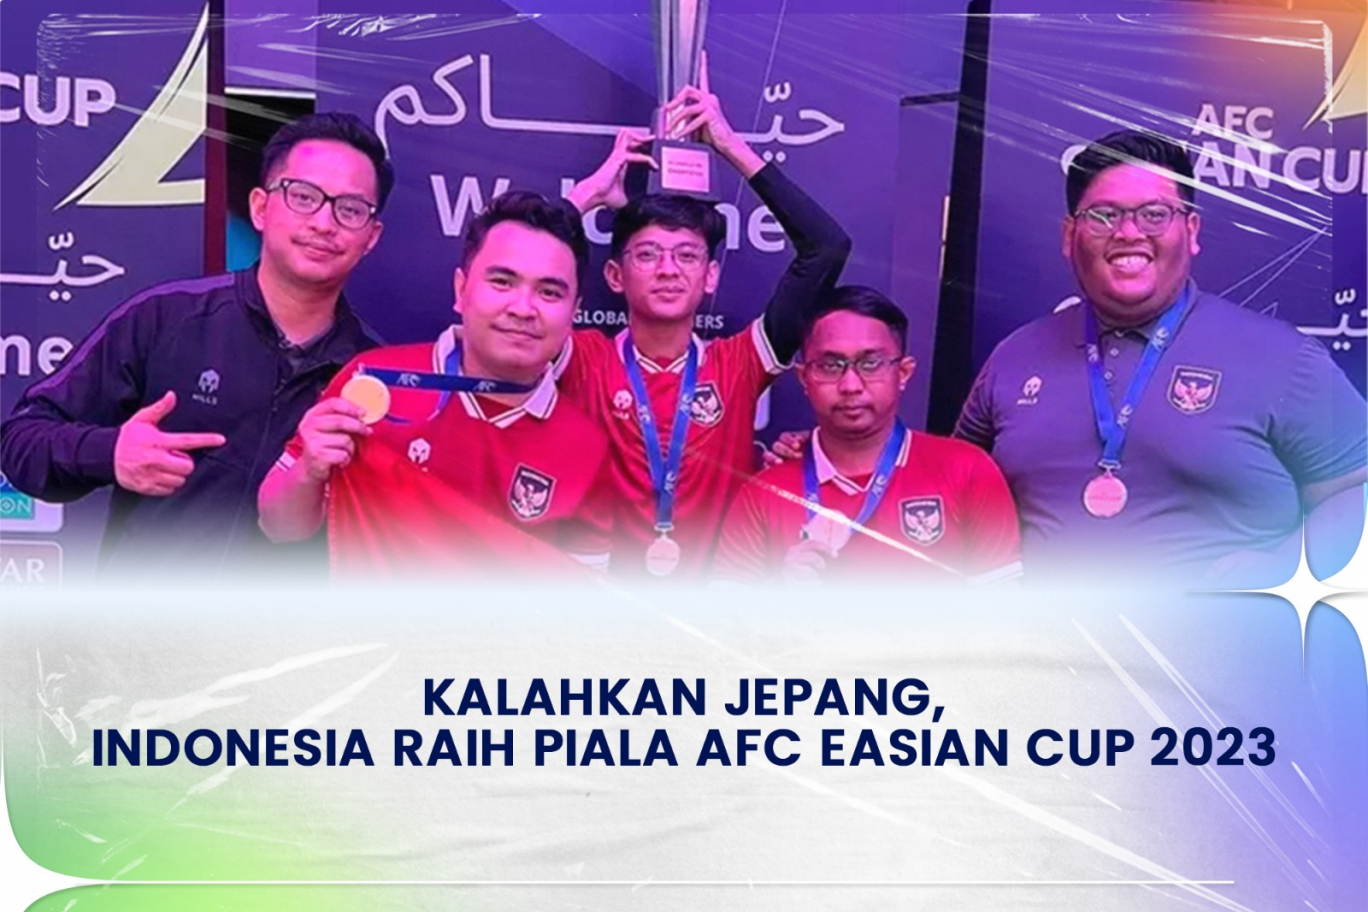 Kalahkan Jepang, Indonesia Raih Piala AFC E-Asian Cup 2023